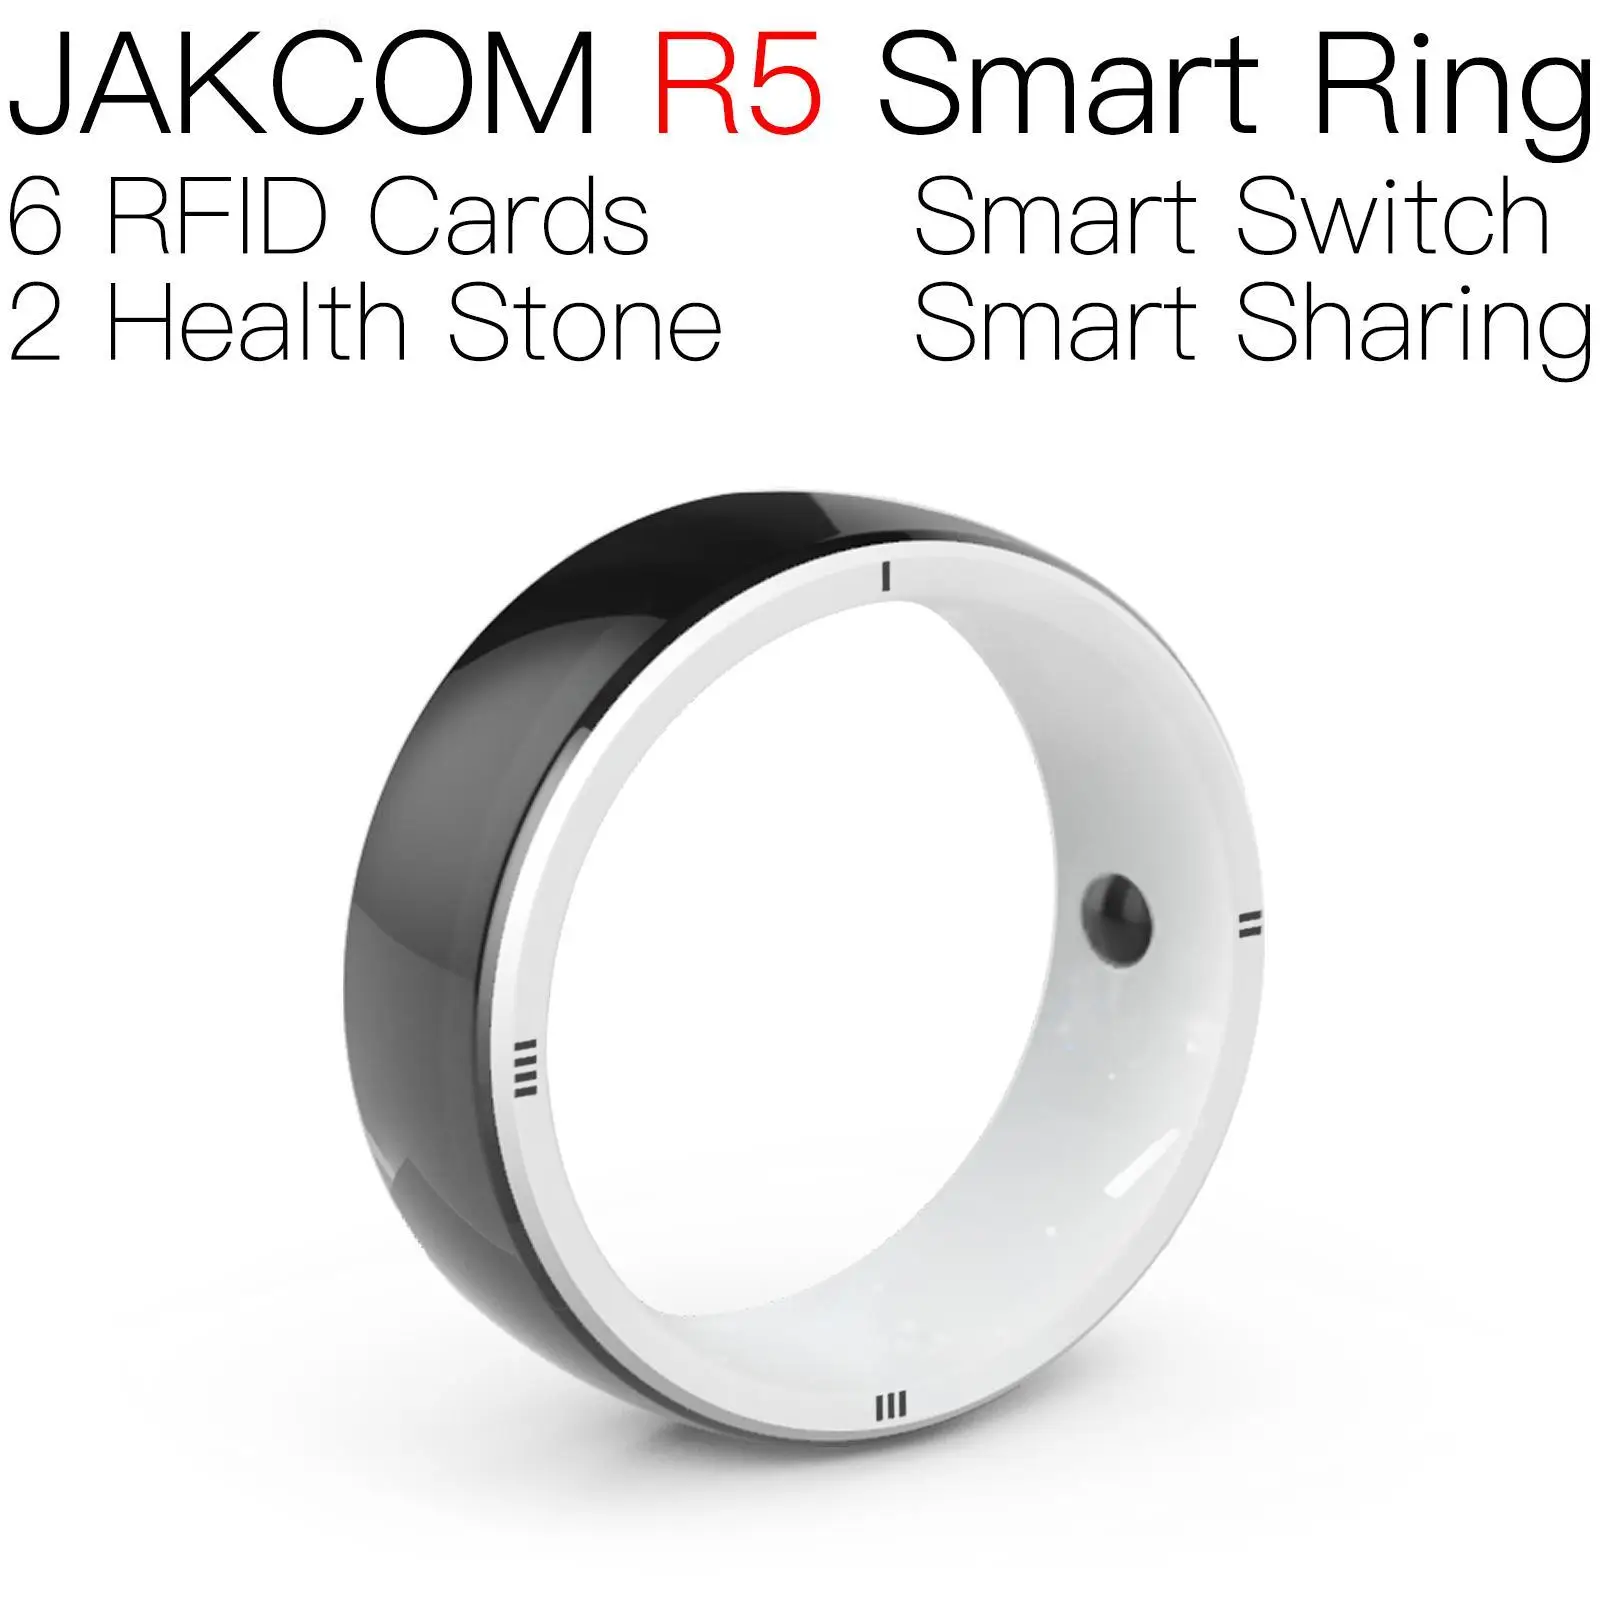 

JAKCOM R5 Smart Ring Match to 125khz 100pcs 22mm coin crossing card electronic rf nfc window sticker cadenas rfid smart